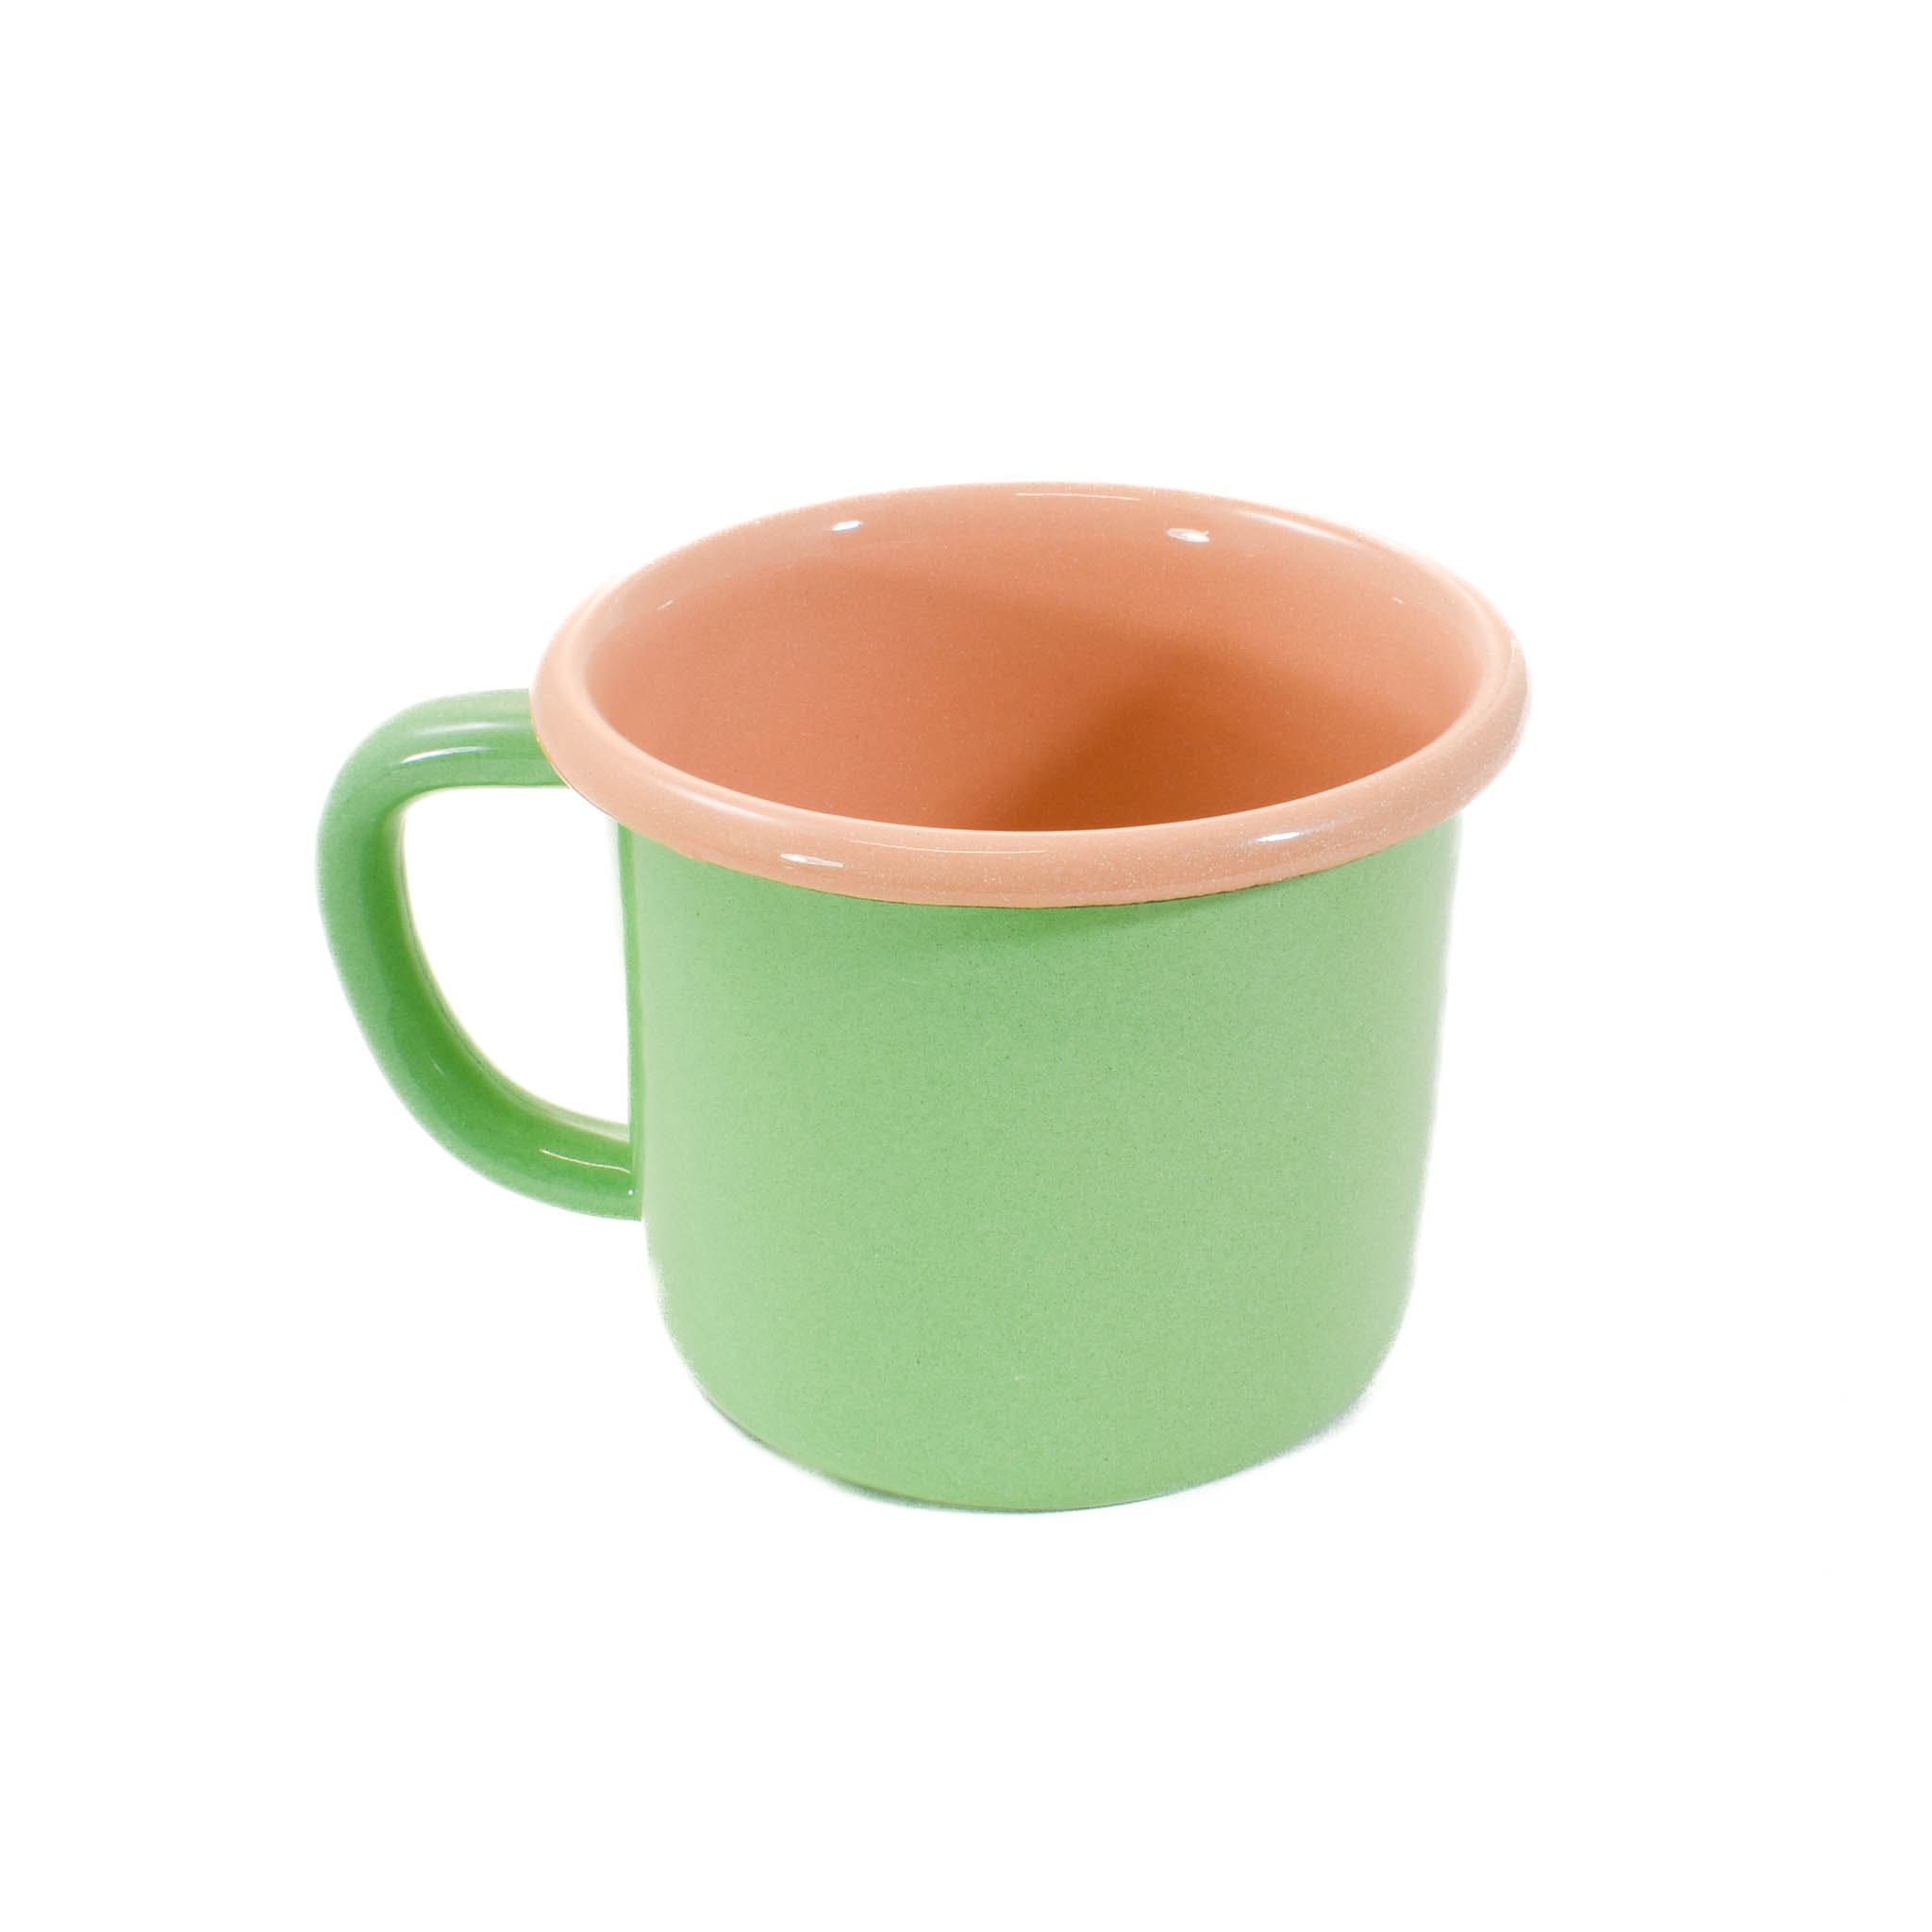 Kapka Colourblock Enamel Mug, Green & Beige